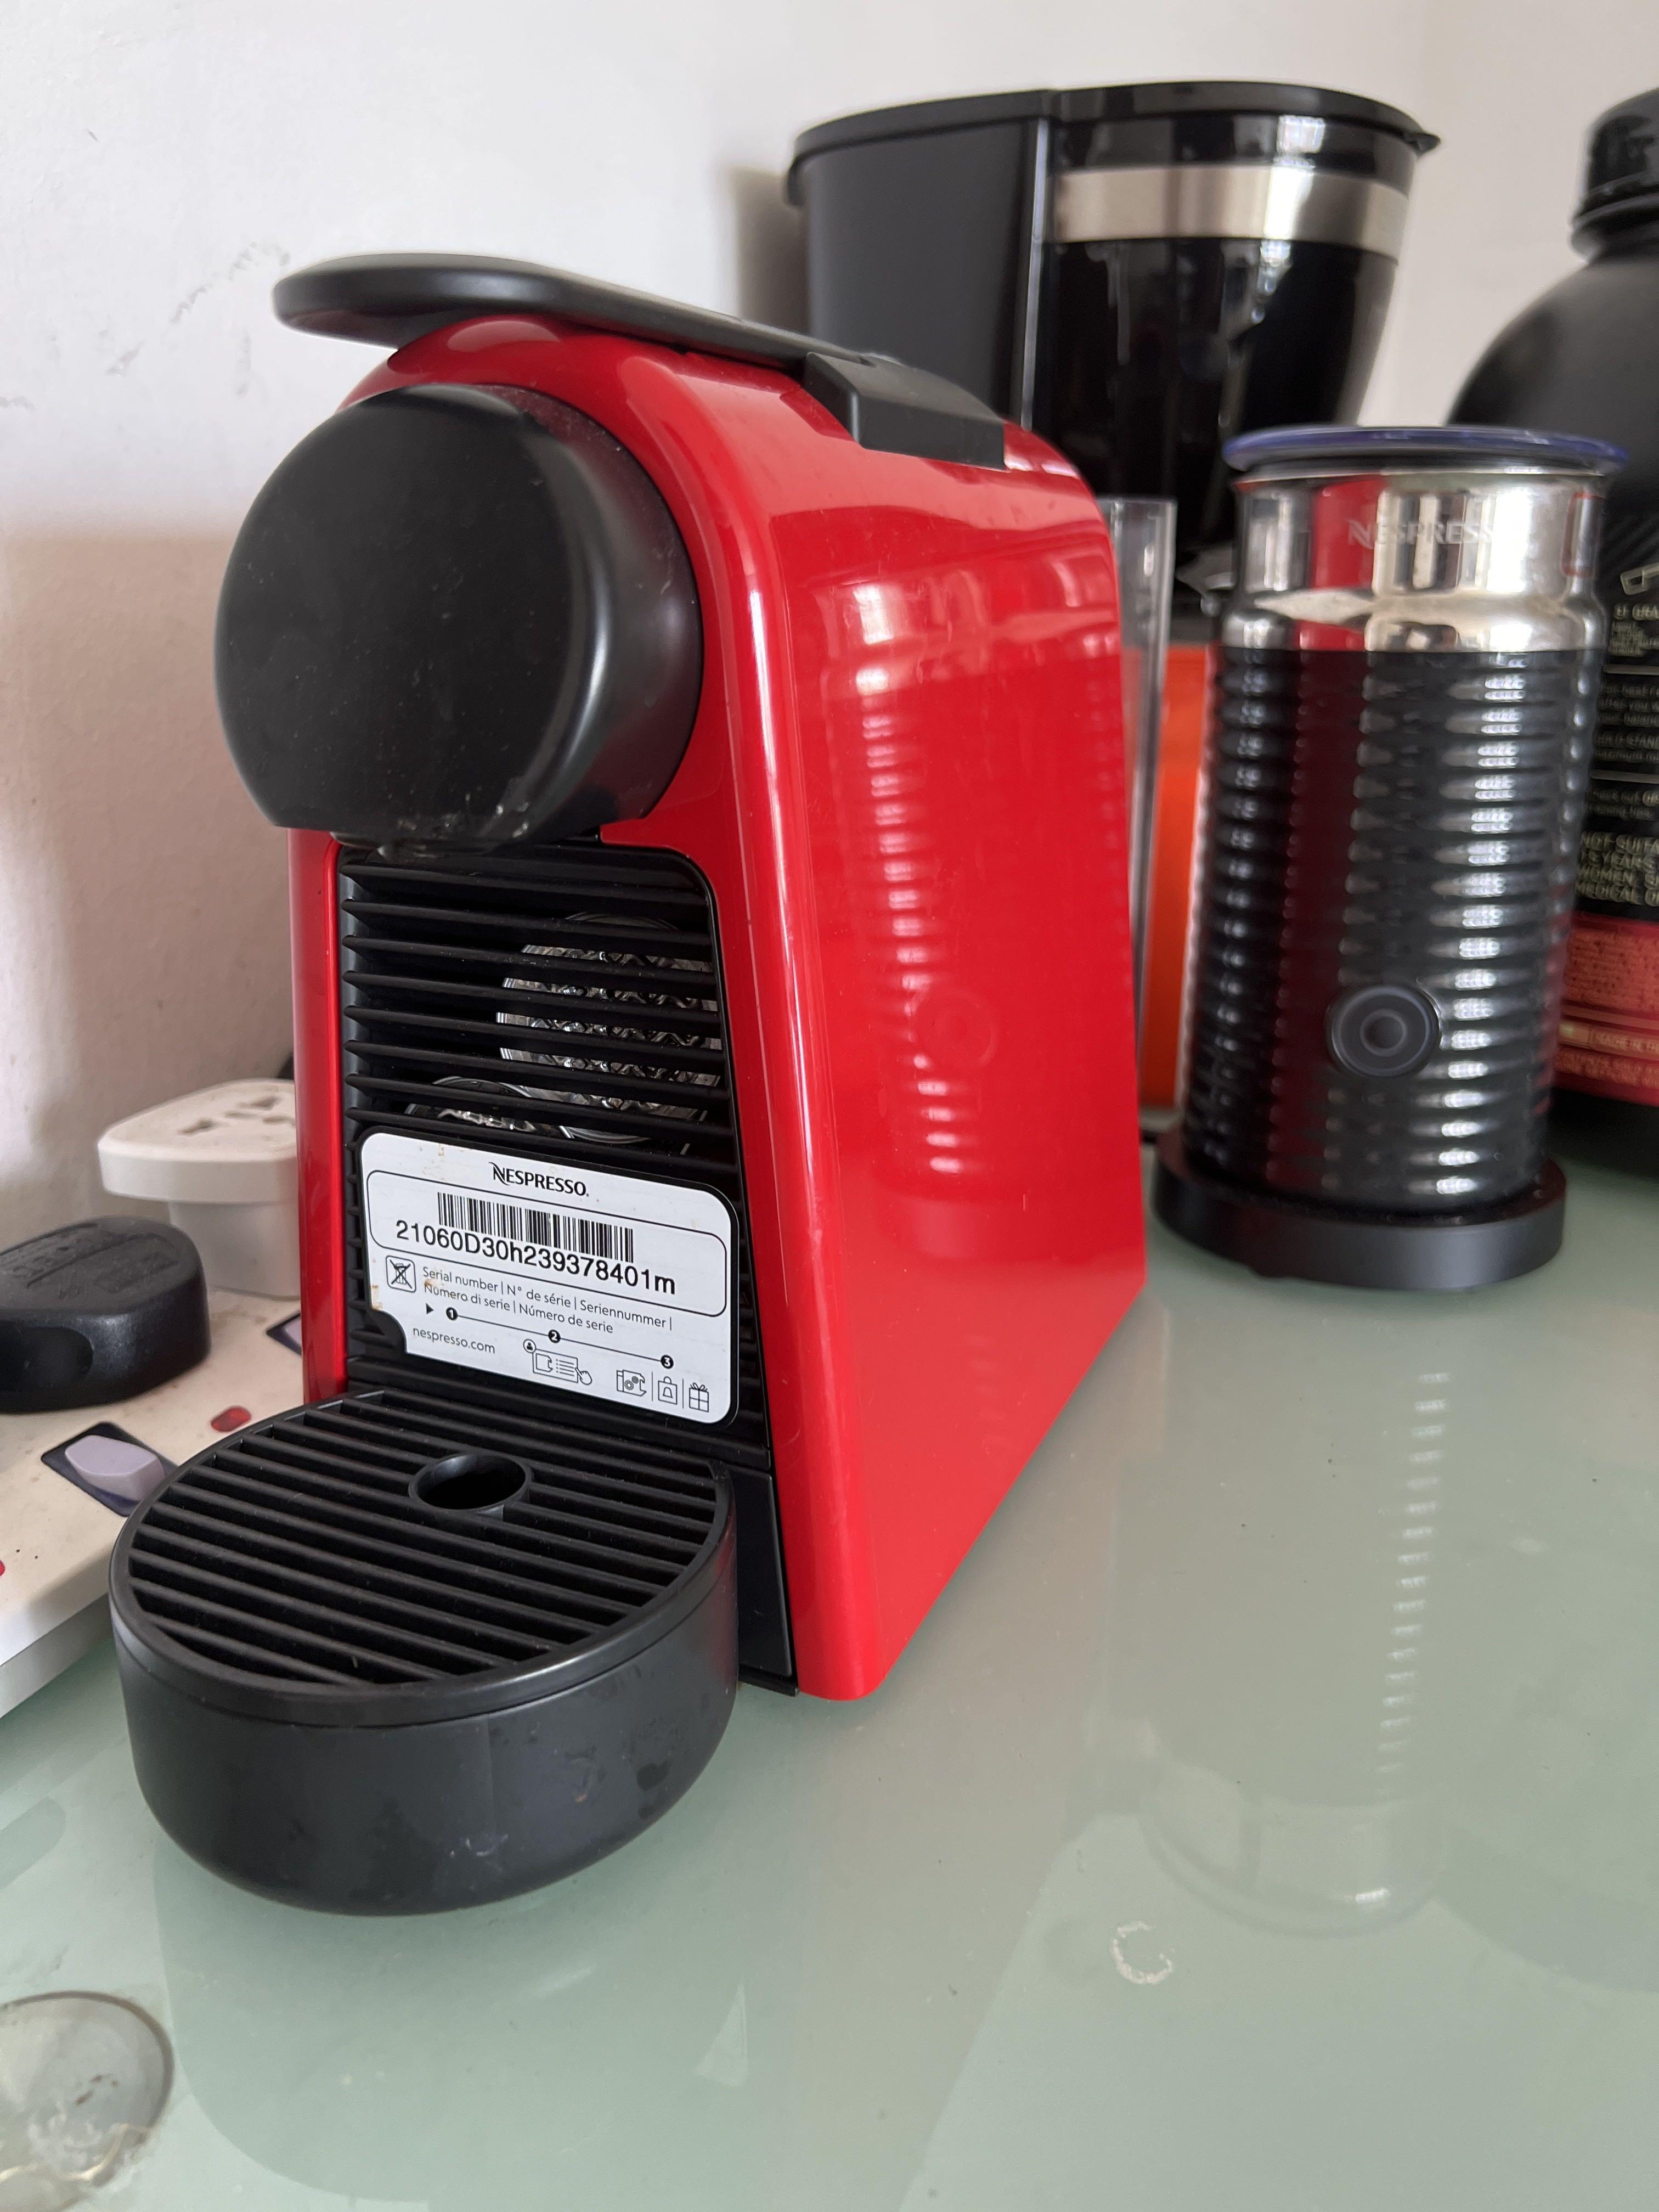 De'Longhi Nespresso Essenza Mini Espresso Machine & Aeroccino Bundle, Ruby Red